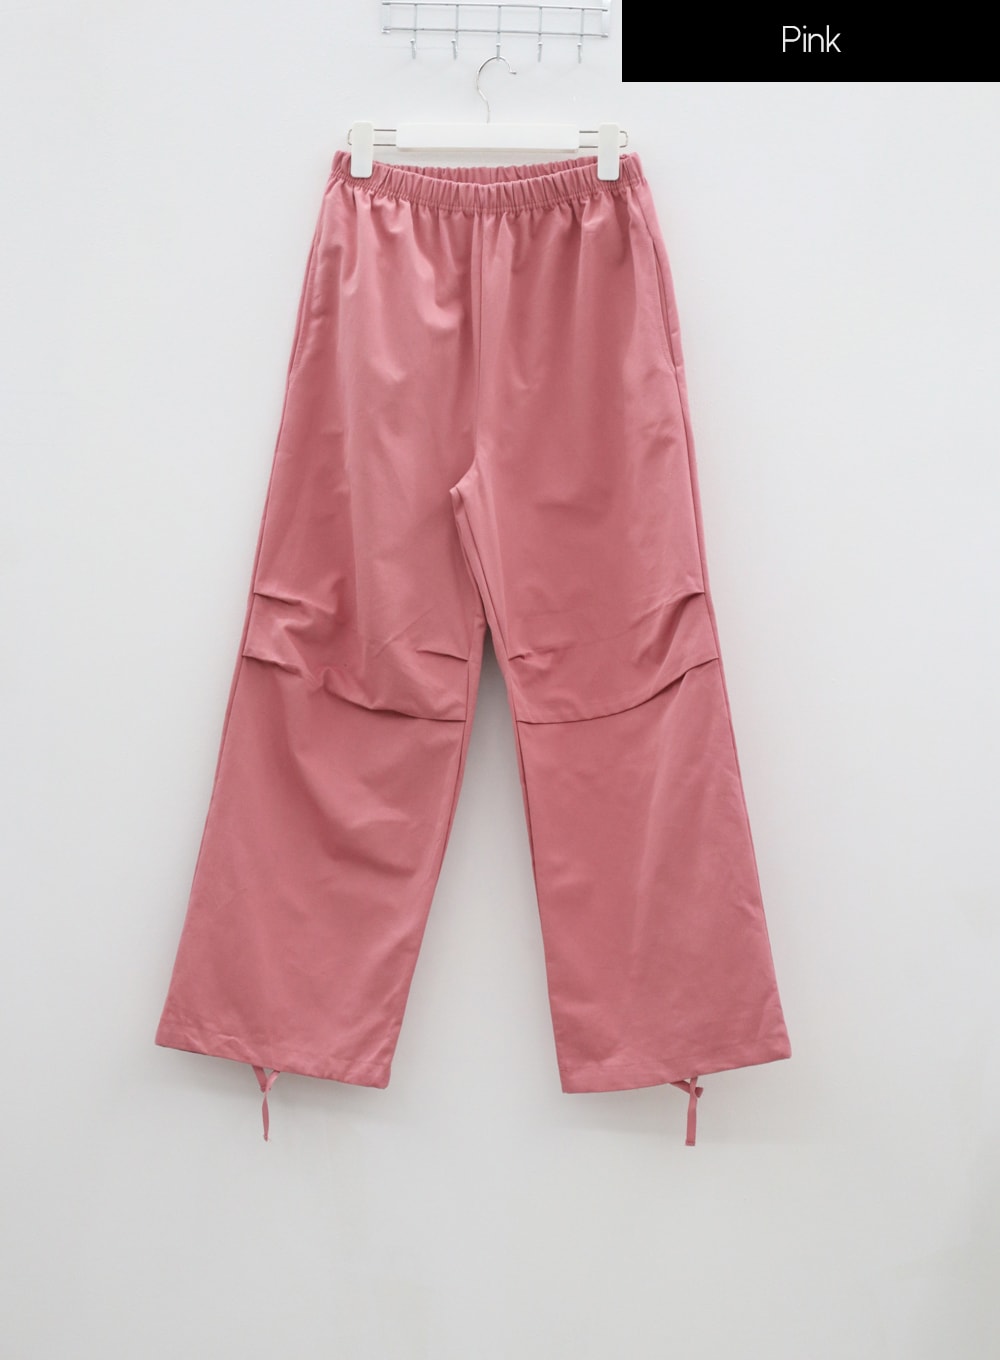 A new day linen summer pants So cute for a flowy - Depop